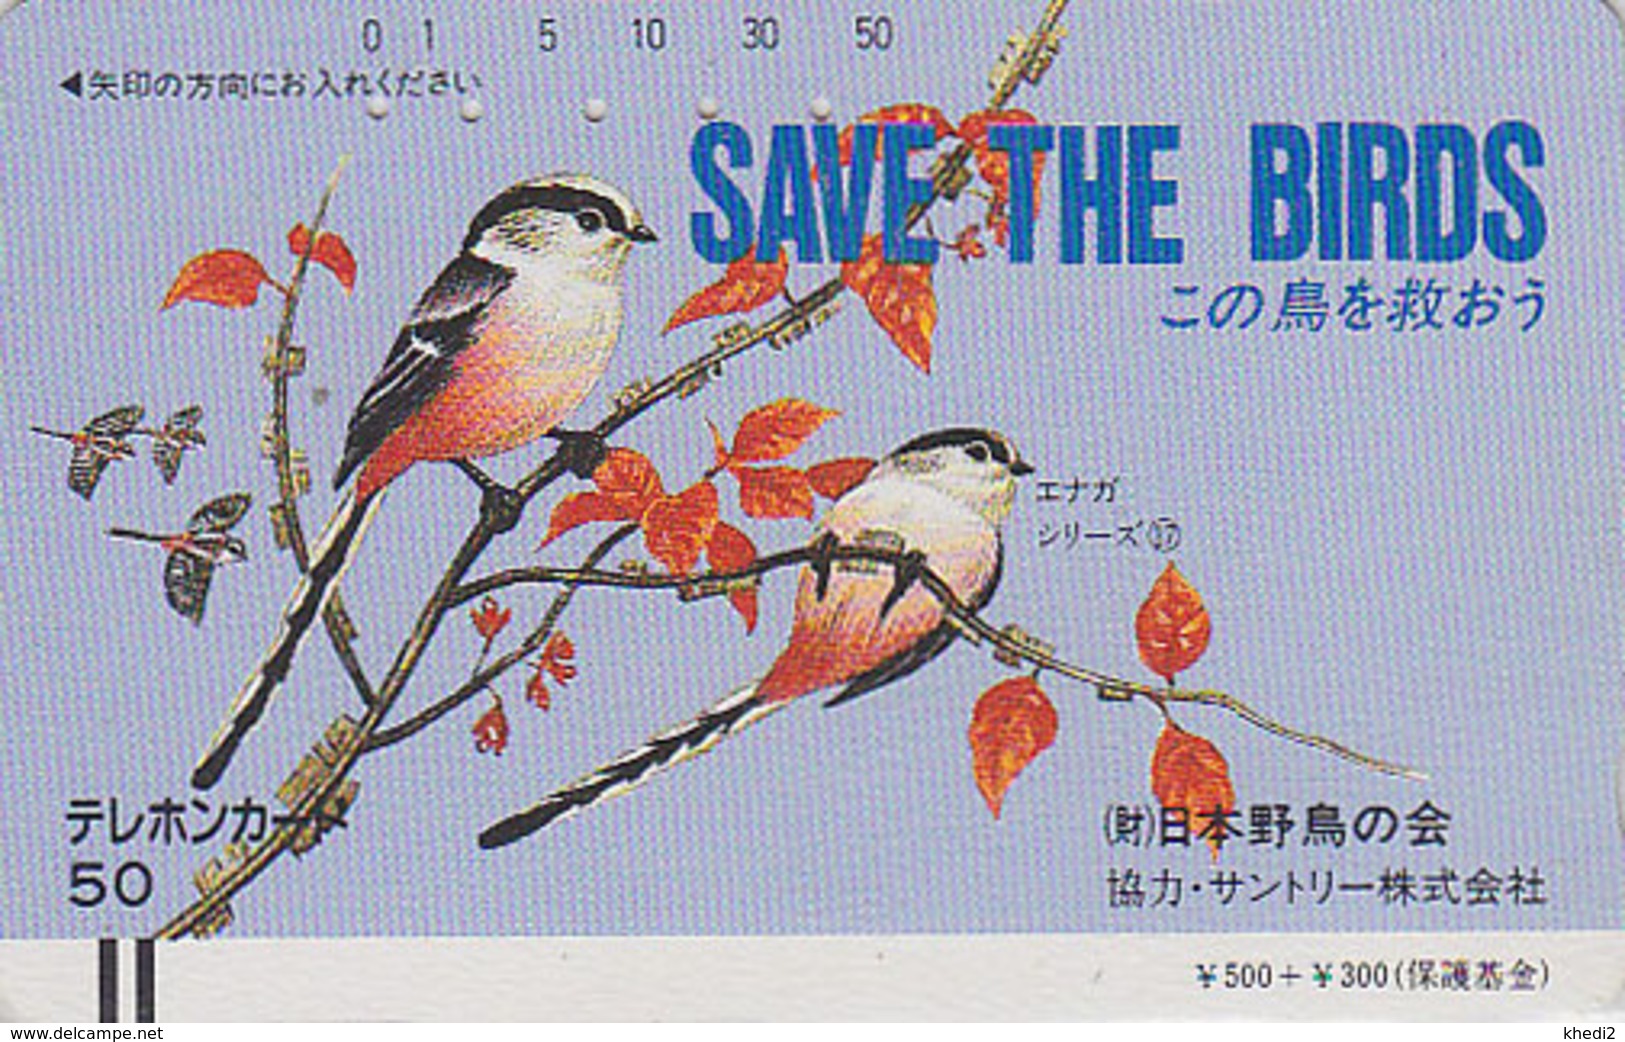 TC Ancienne JAPON / 110-14087 - Série 1 SAVE THE BIRDS / 17/60 - OISEAU MESANGE - BIRD JAPAN Front Bar Phonecard - Pájaros Cantores (Passeri)